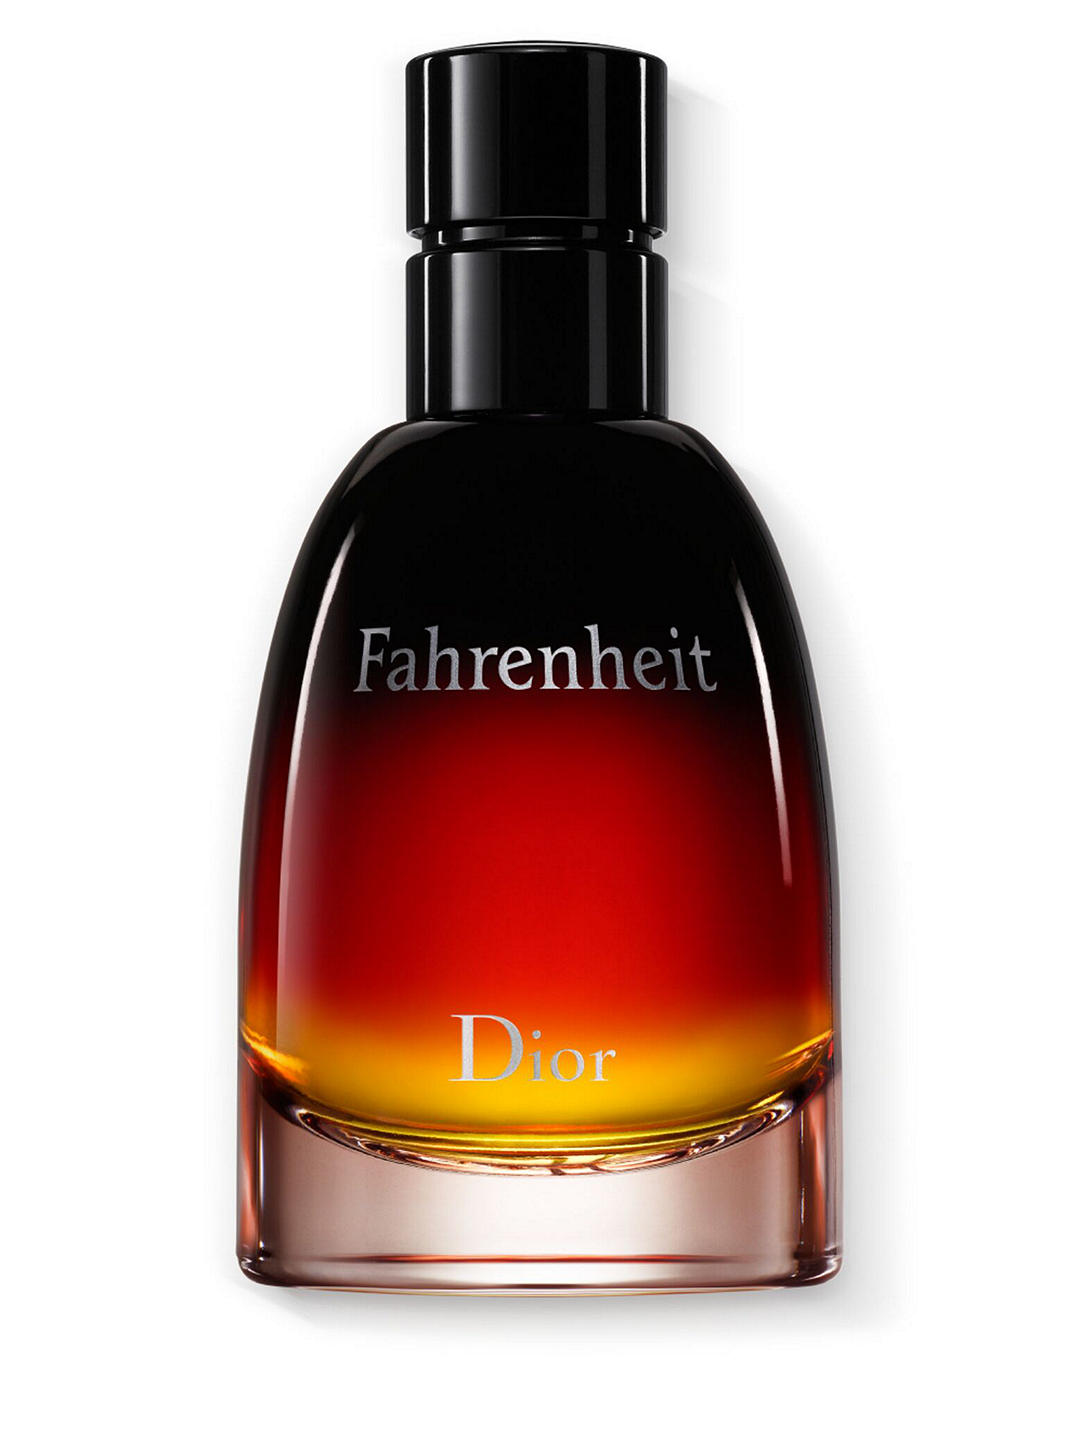 DIOR Fahrenheit Eau de Parfum, 75ml 1